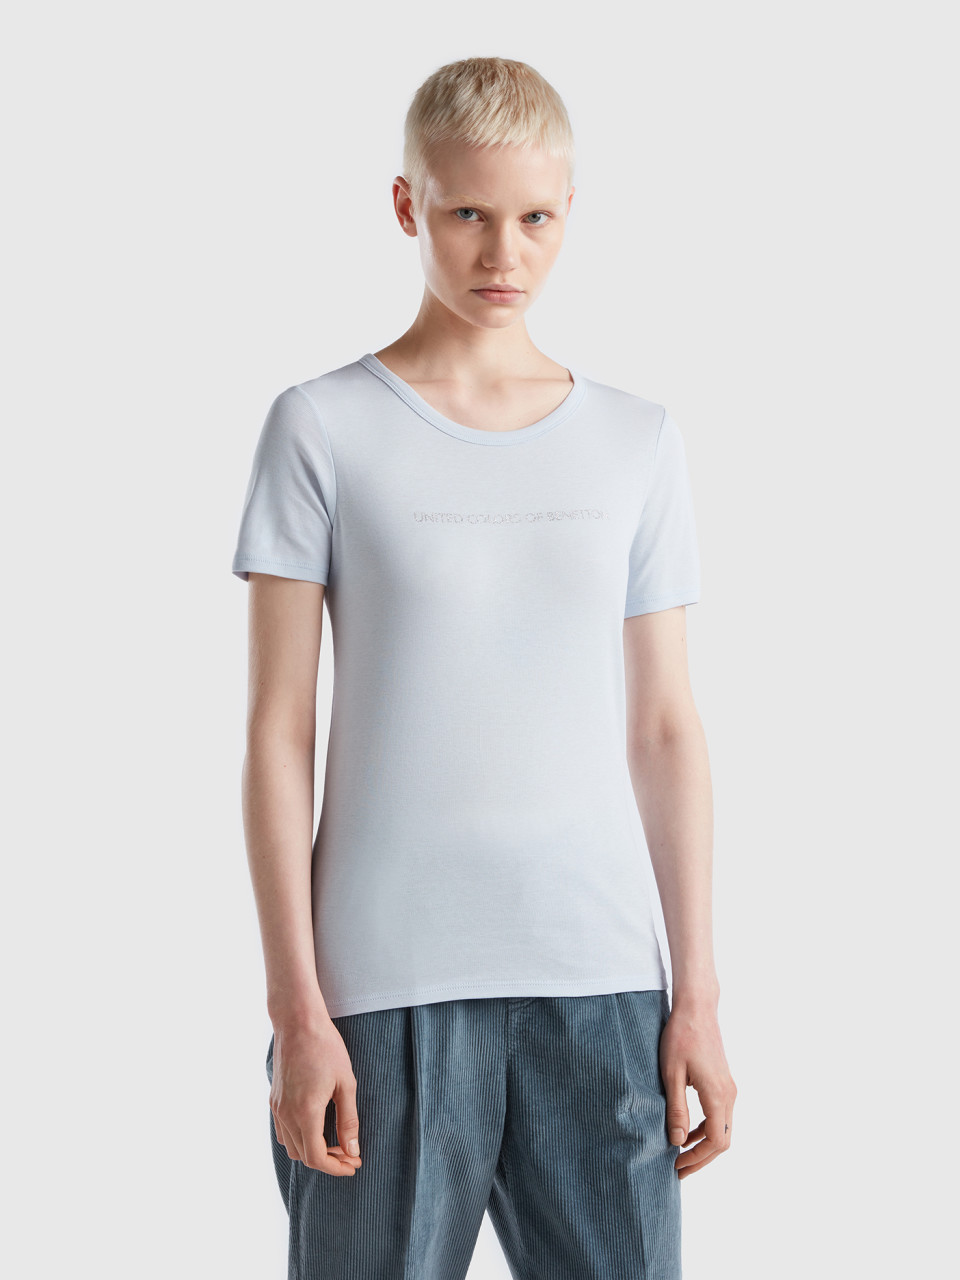 Benetton, T-shirt In 100% Cotton With Glitter Print Logo, Sky Blue, Women